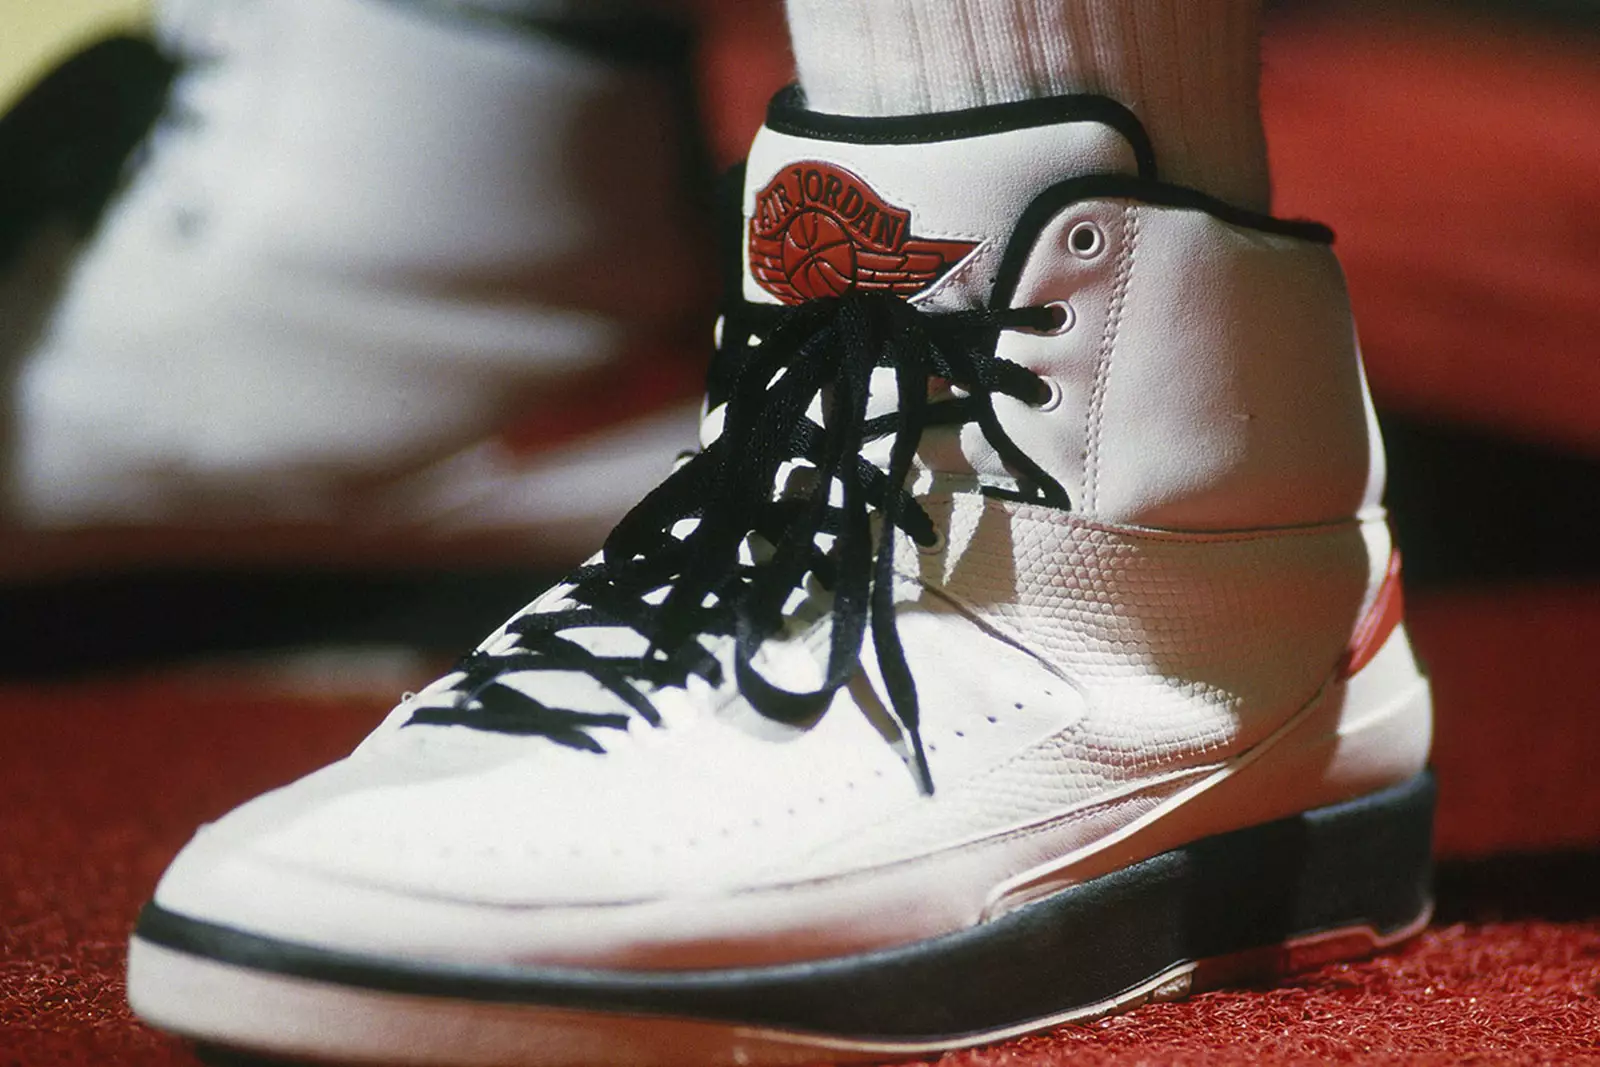 How to Style the Air Jordan 3 - KLEKT Blog